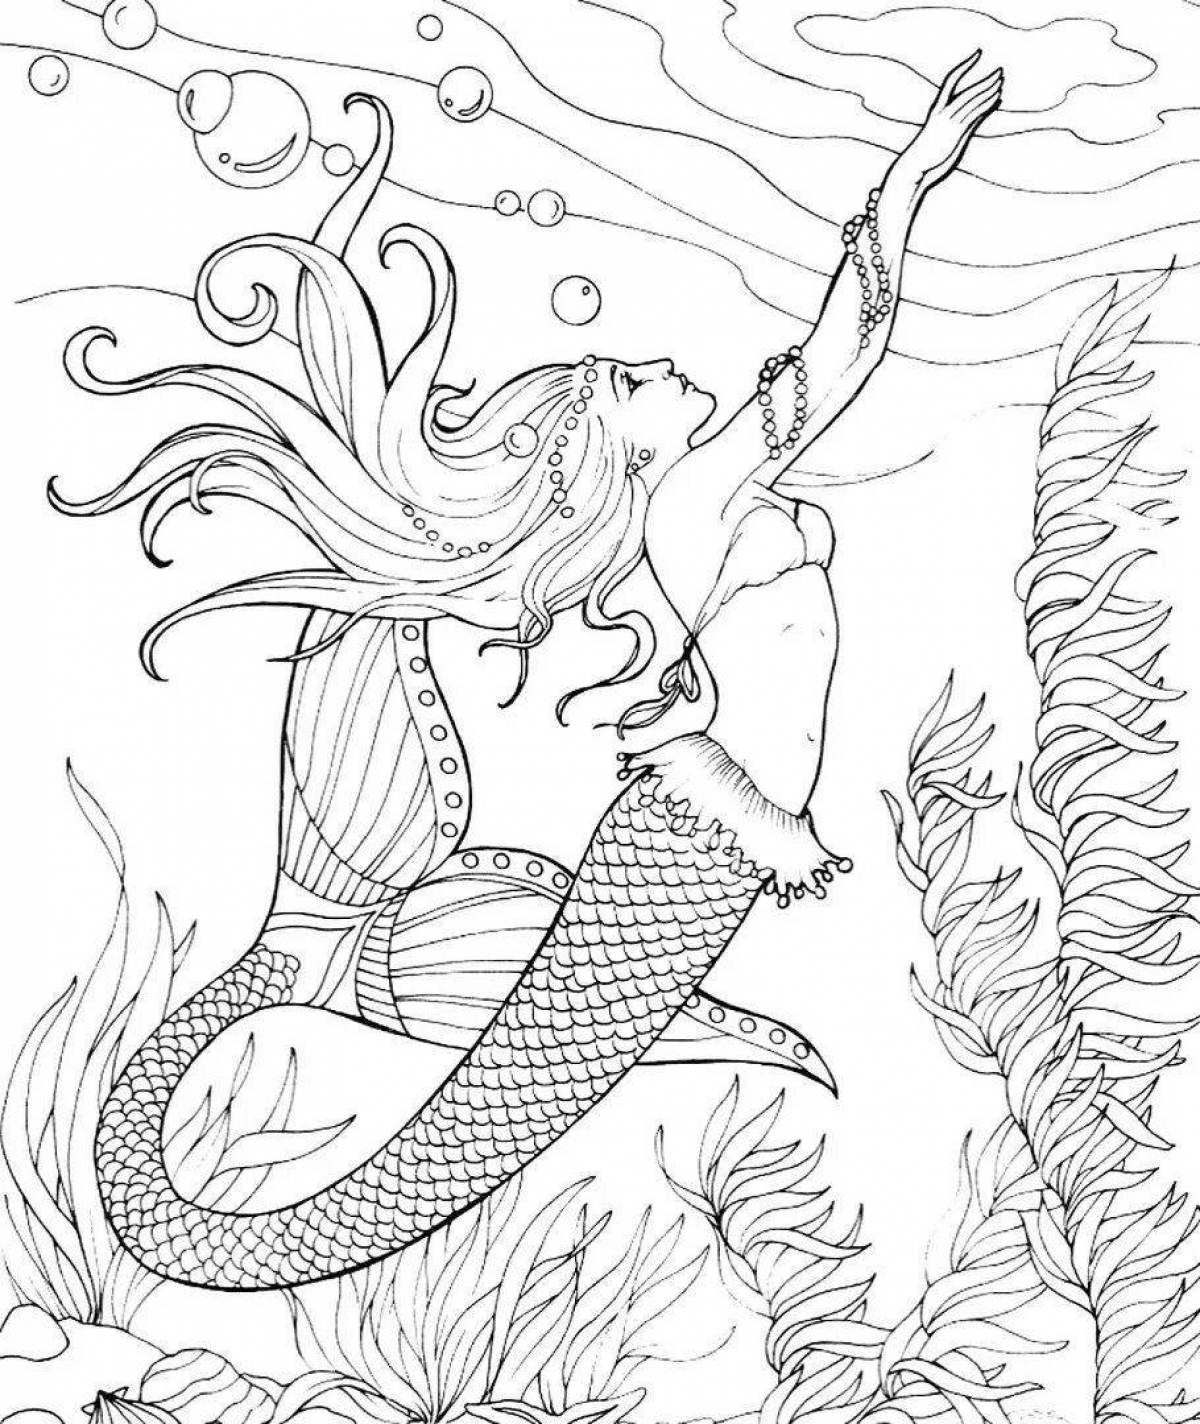 Amazing mermaid coloring book